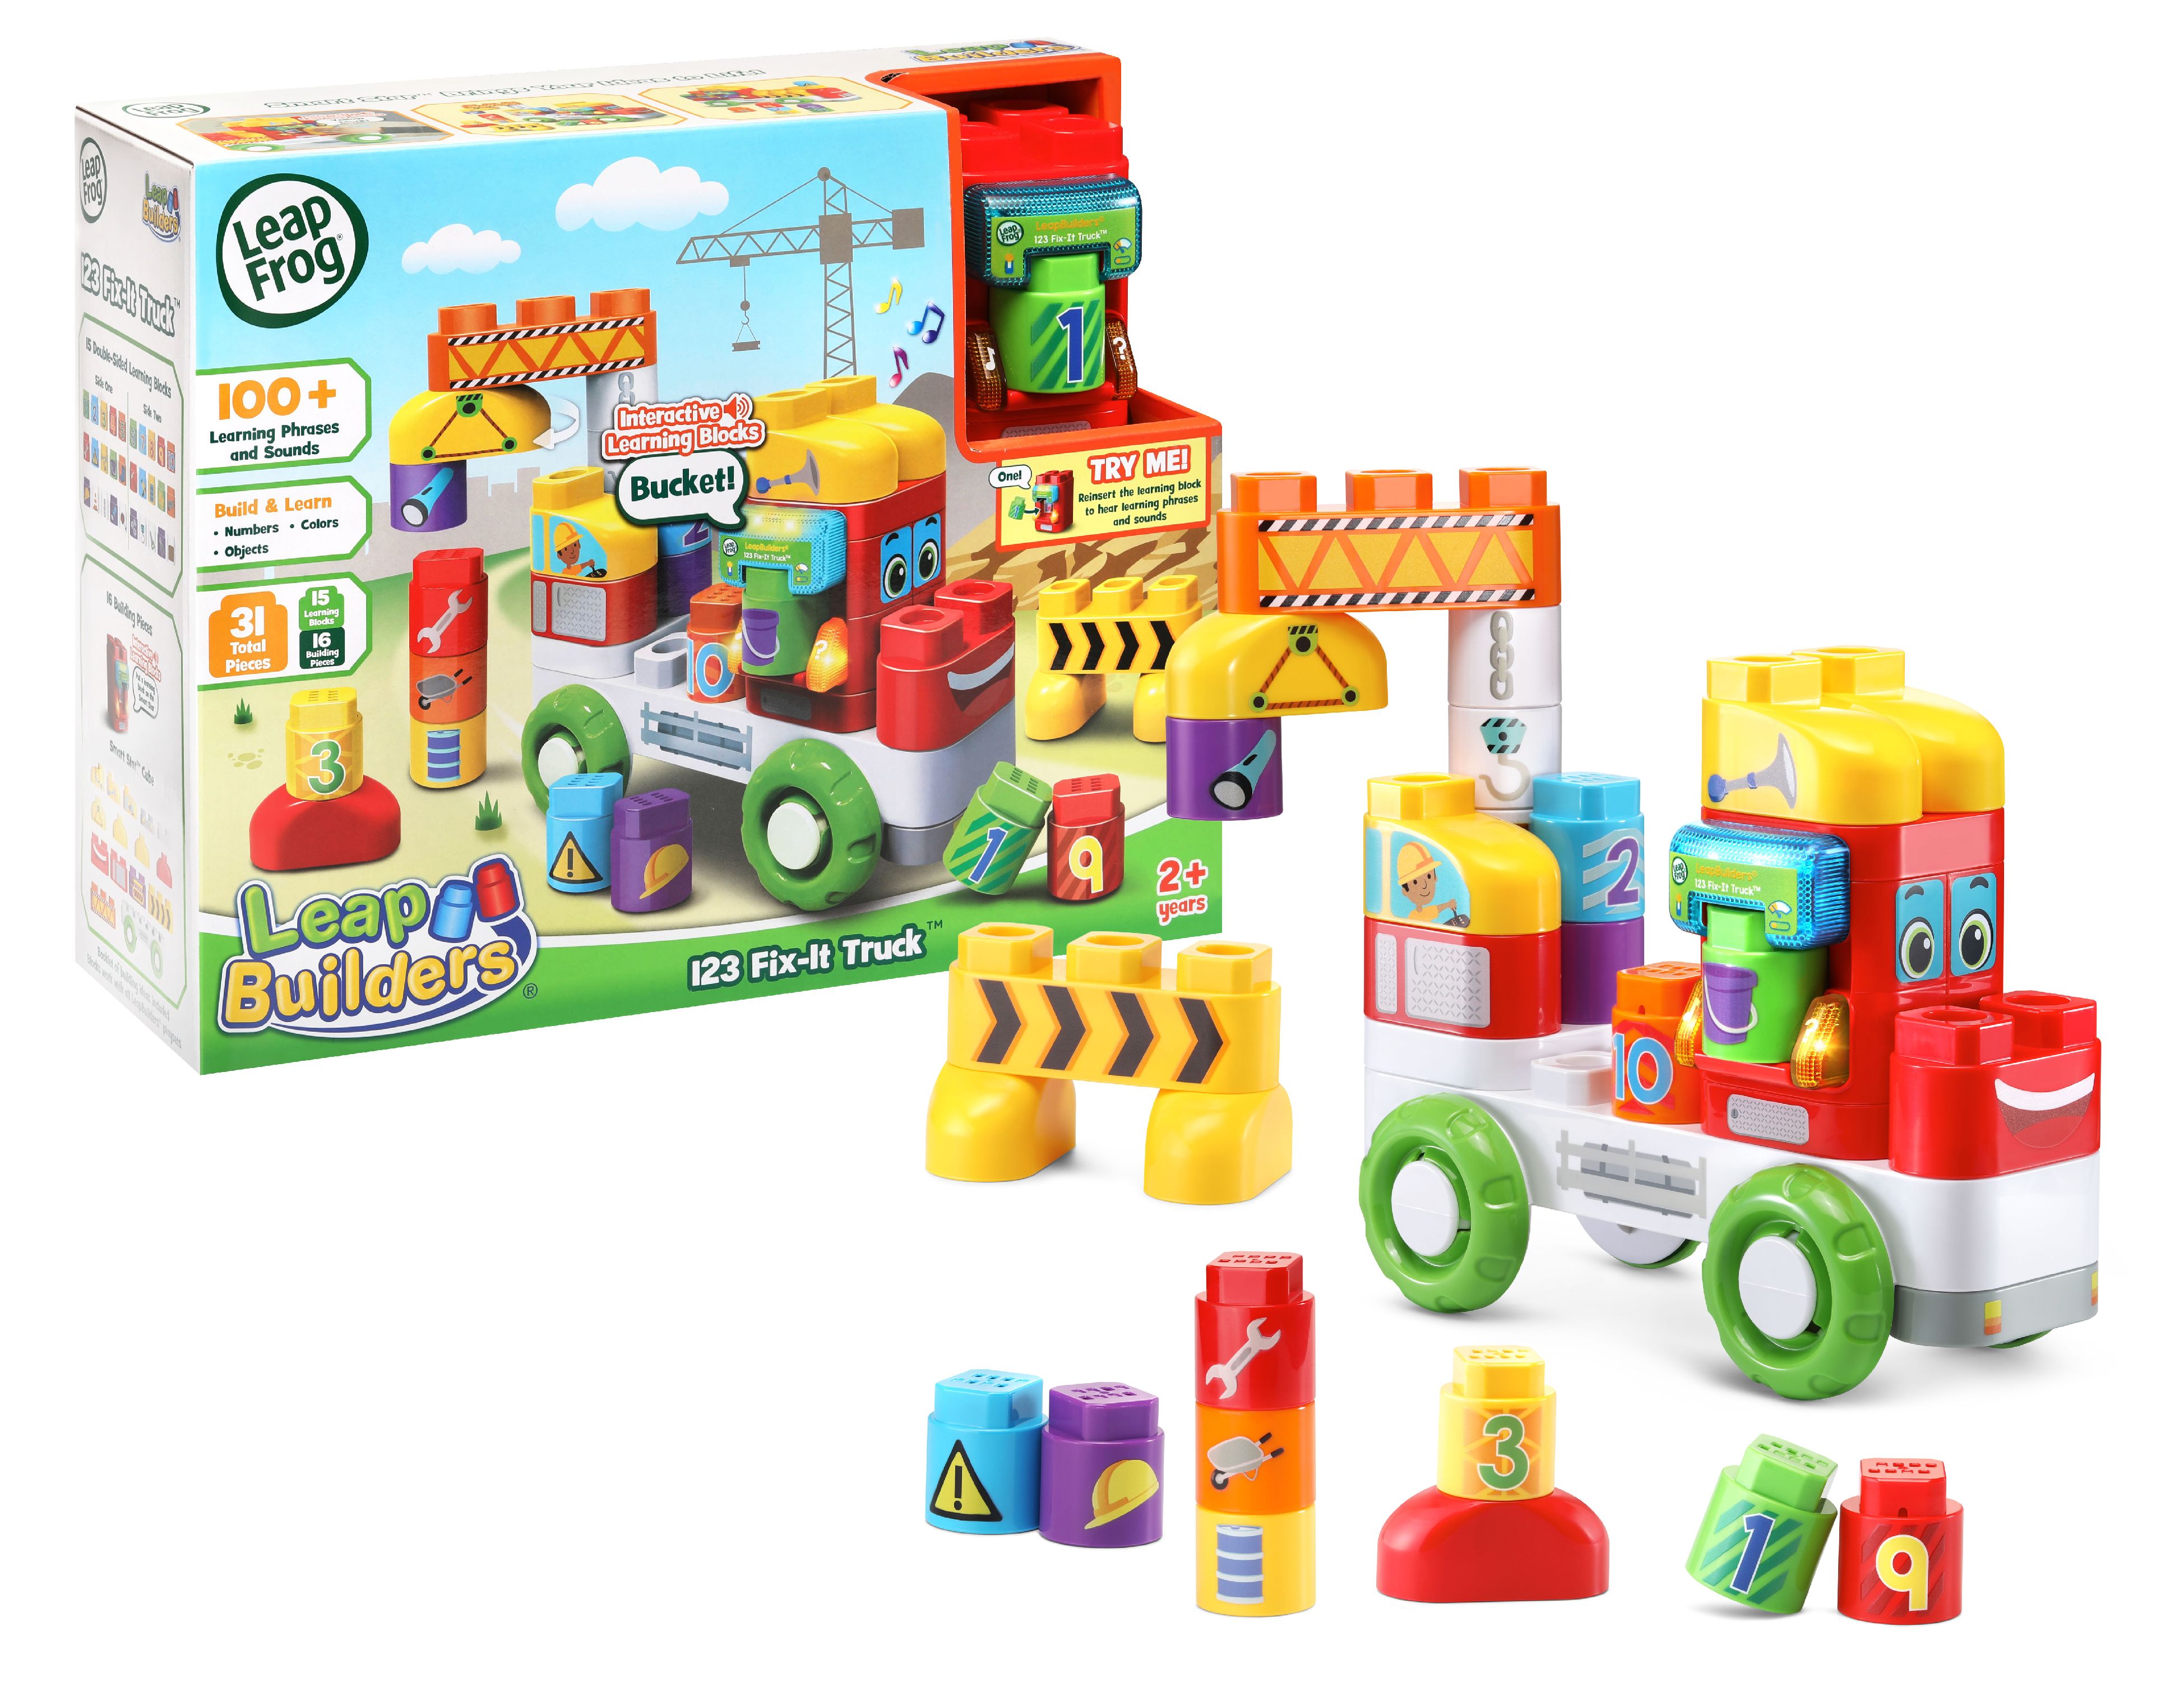 LeapFrog LeapBuilders 123 Fix-It Truck Learning Blocks Toy for Kids 